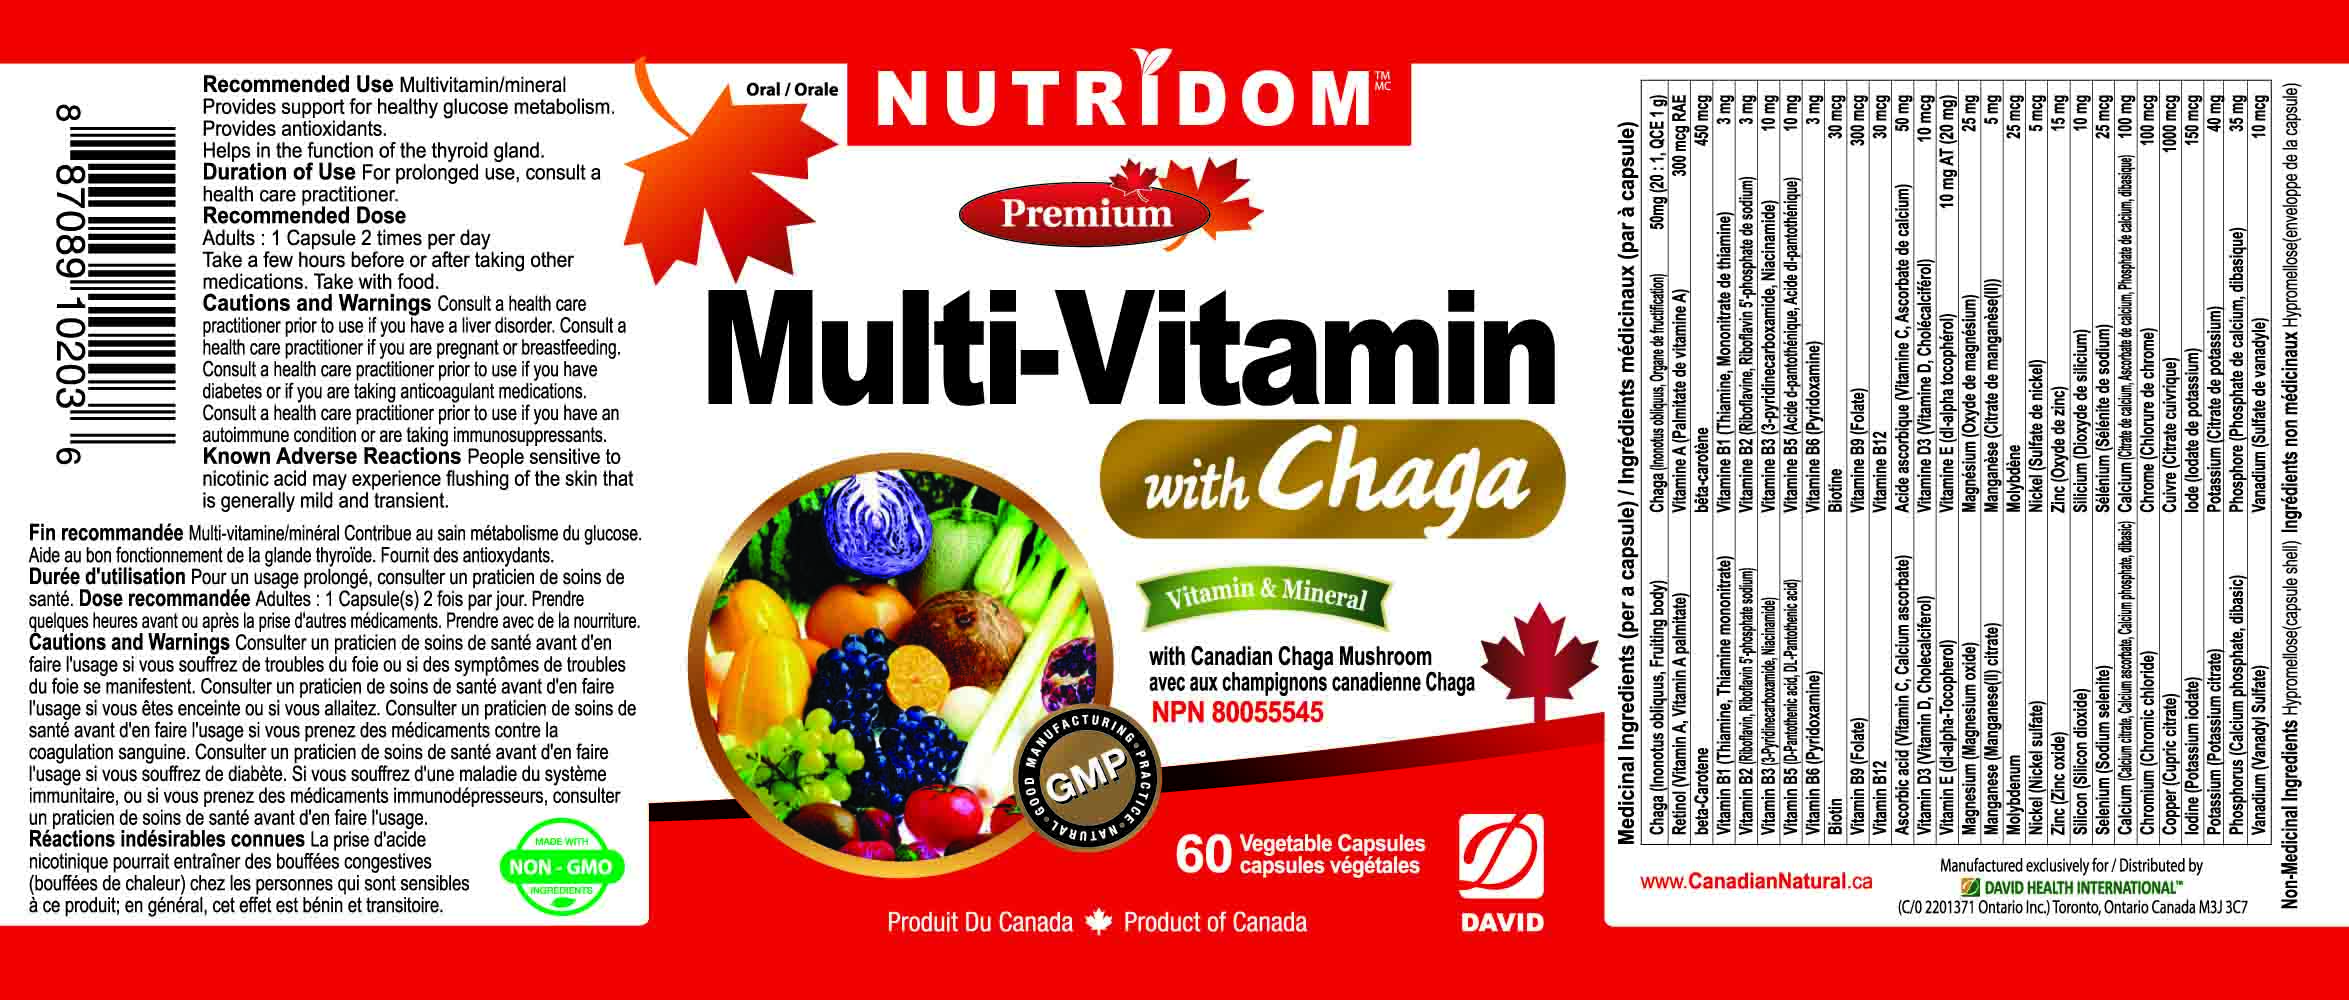 NUTRIDOM MULTI-VITAMIN WITH CHAGA